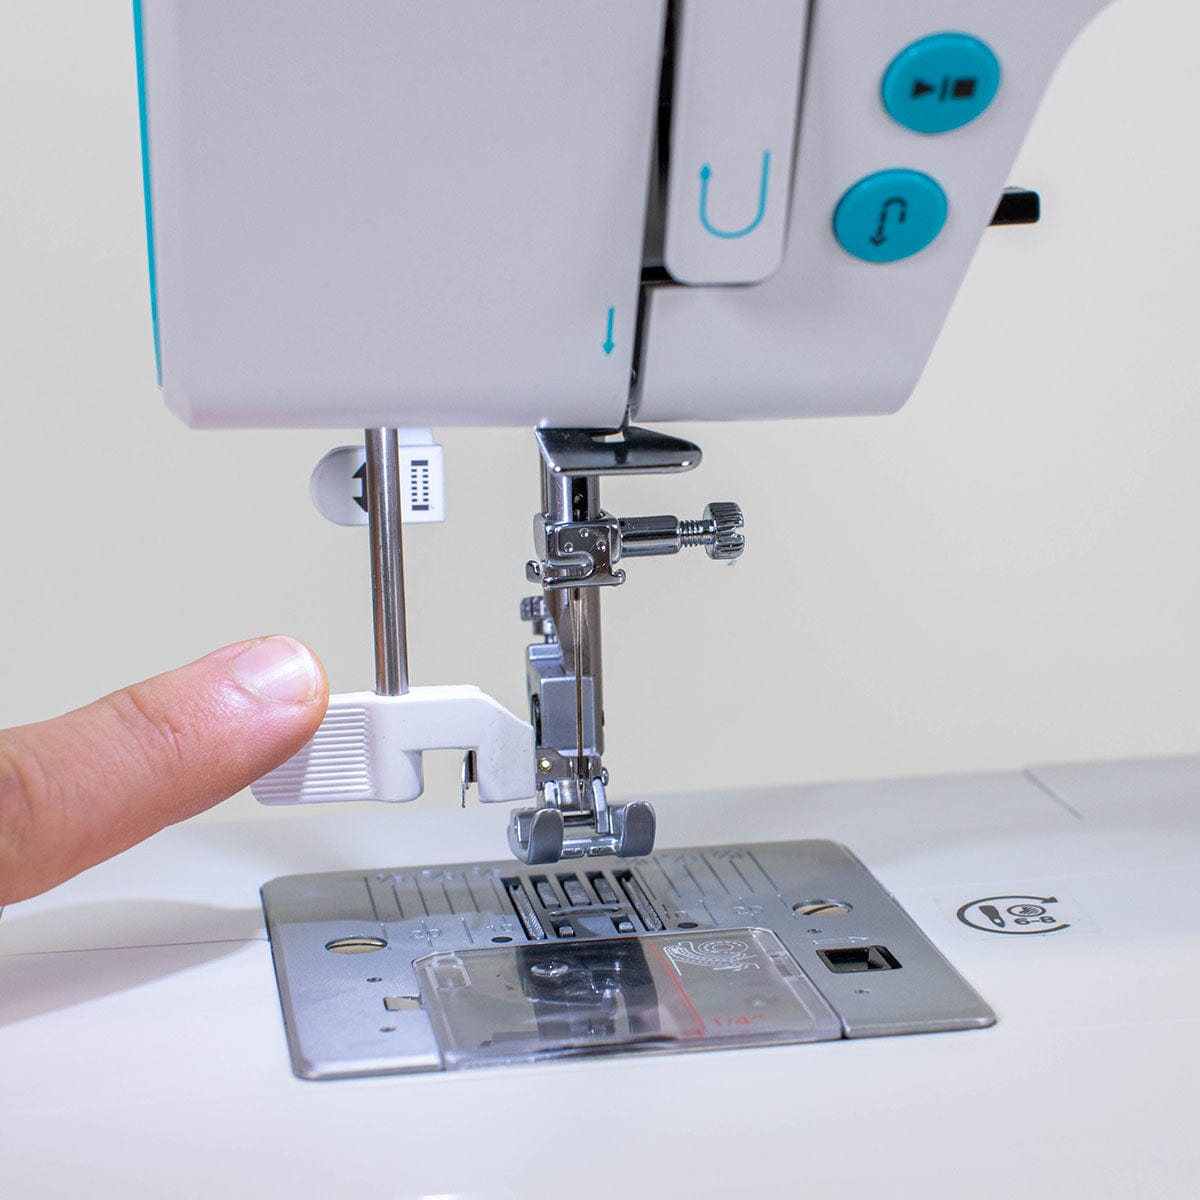 Pfaff Smarter 260C Sewing Machine + FREE Gifts worth £74